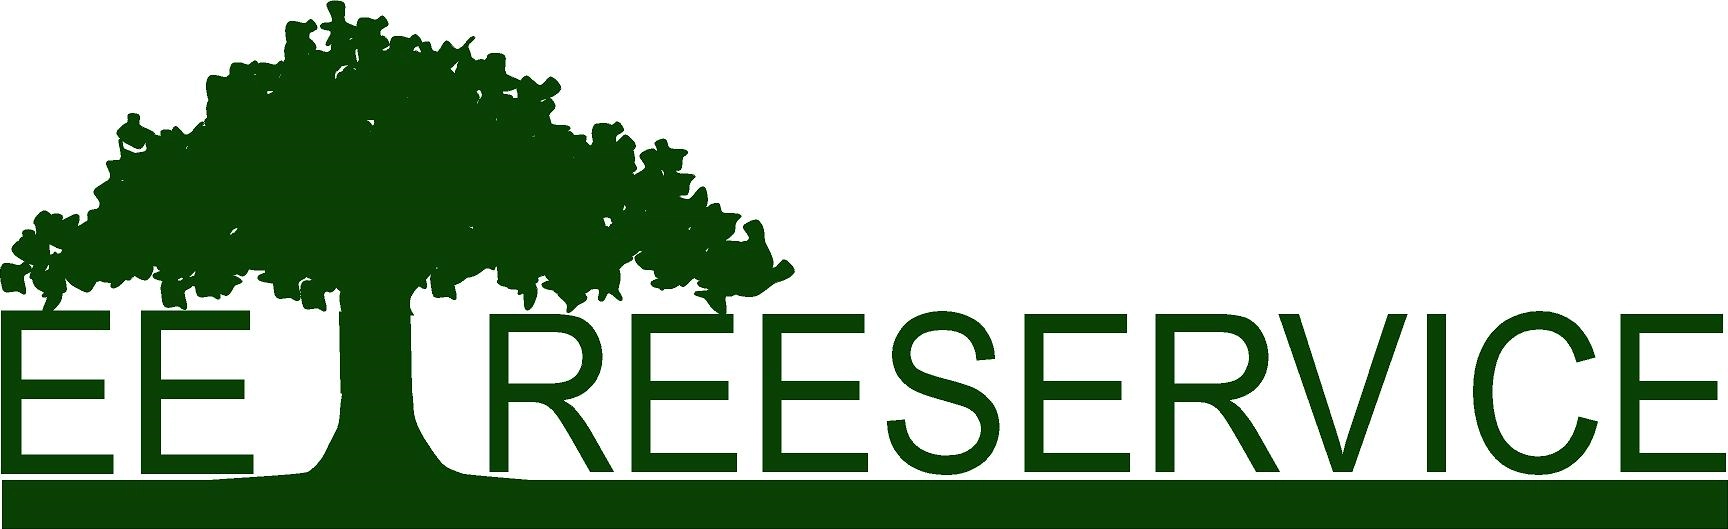 EE TREE SERVICE INC Logo